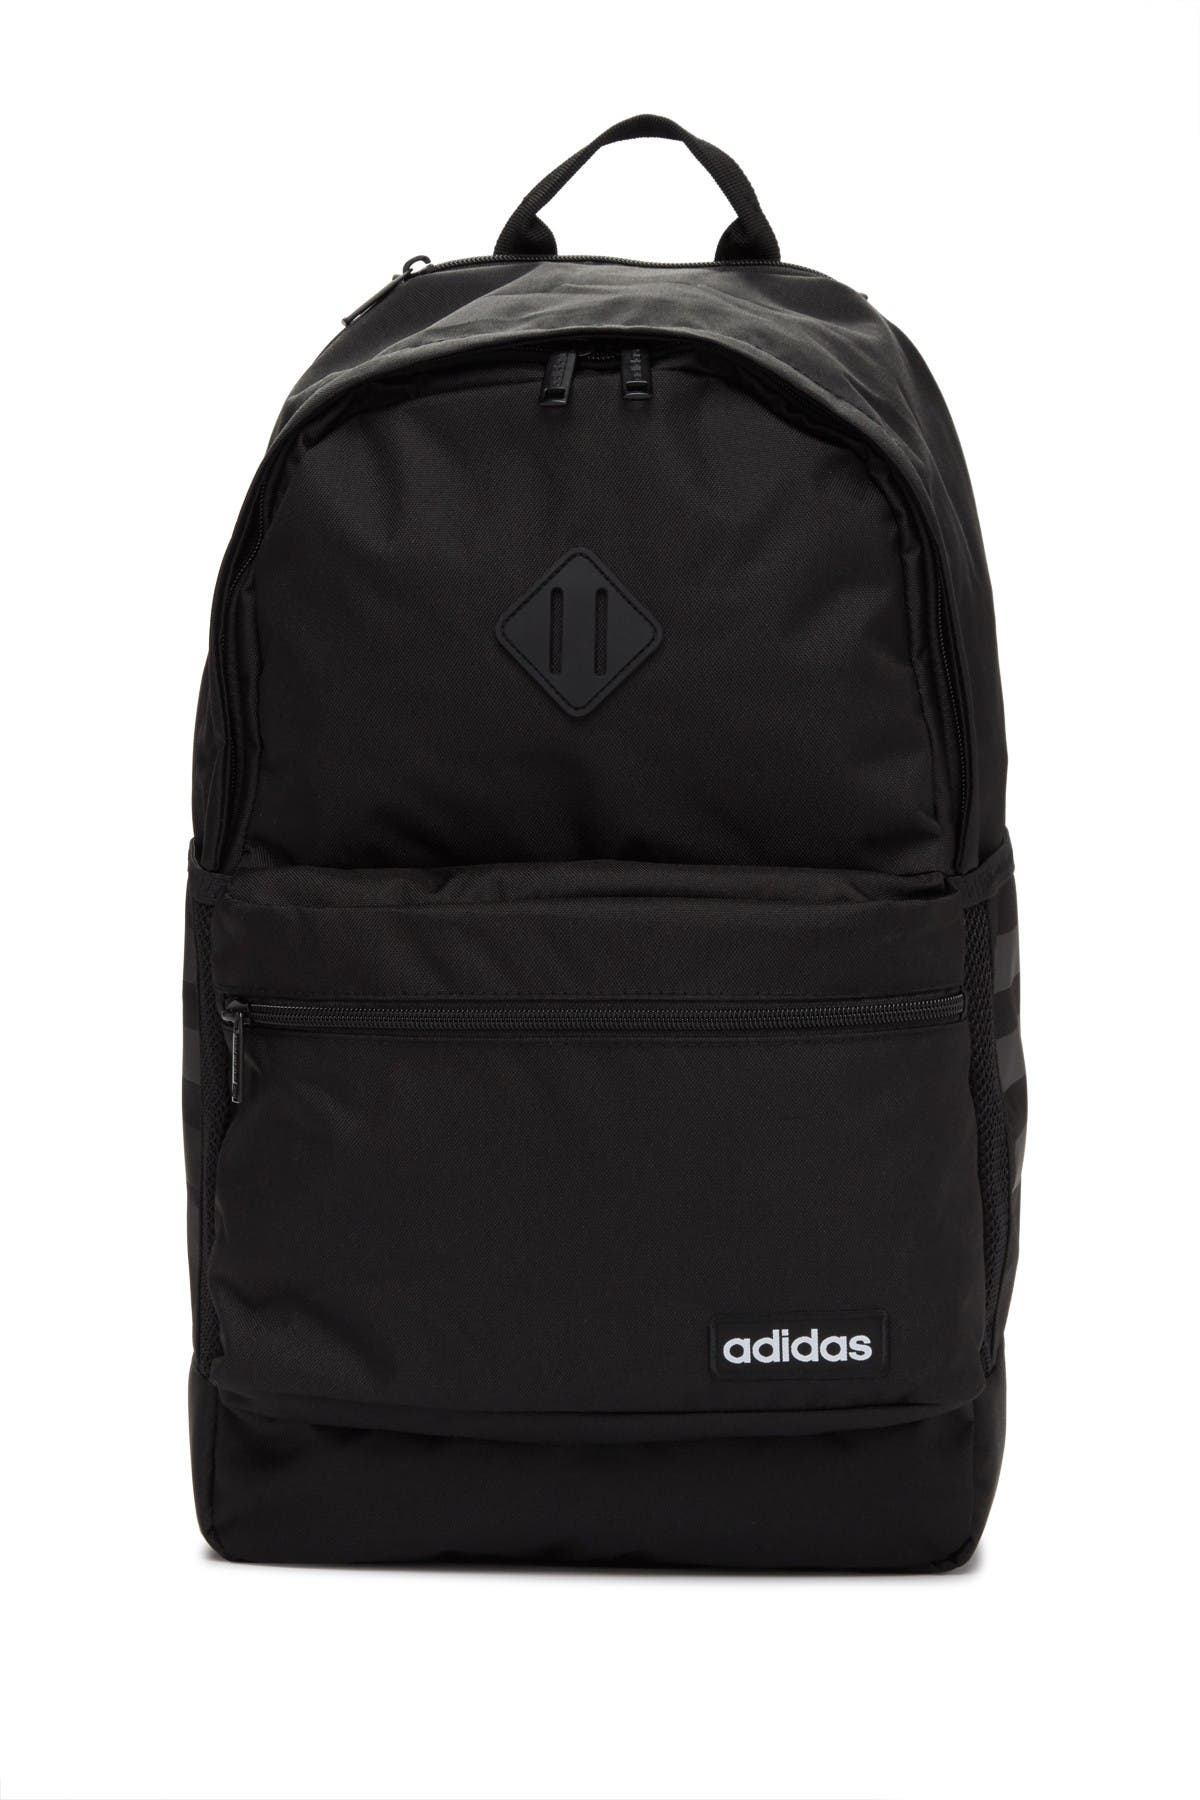 adidas | Classic 3S II Backpack 